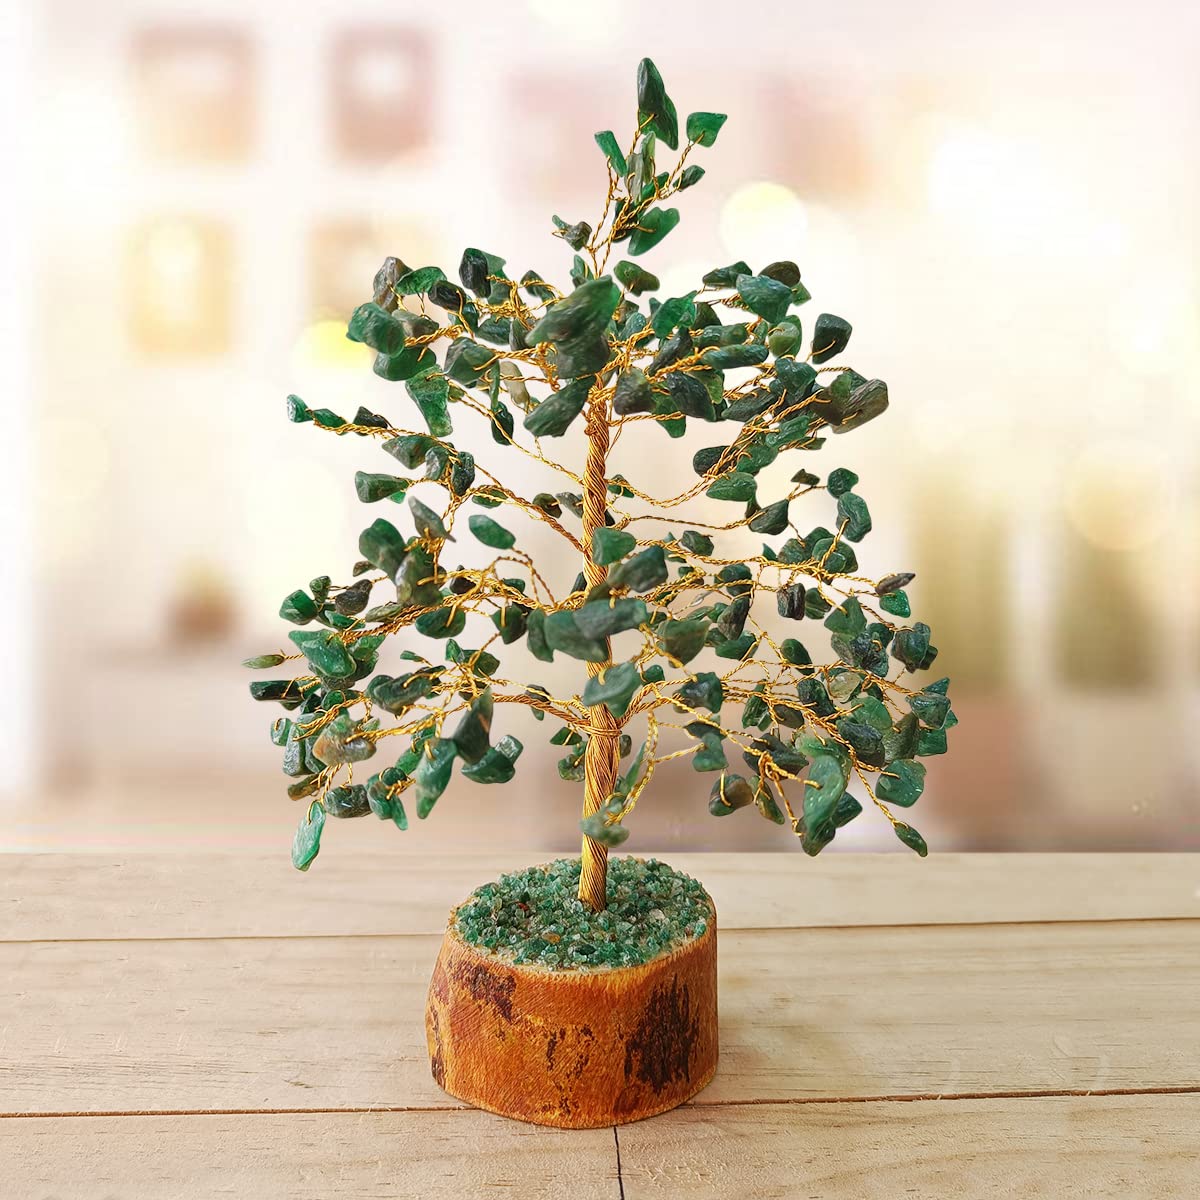 Green Jade Money Tree for Abundance and Prosperity